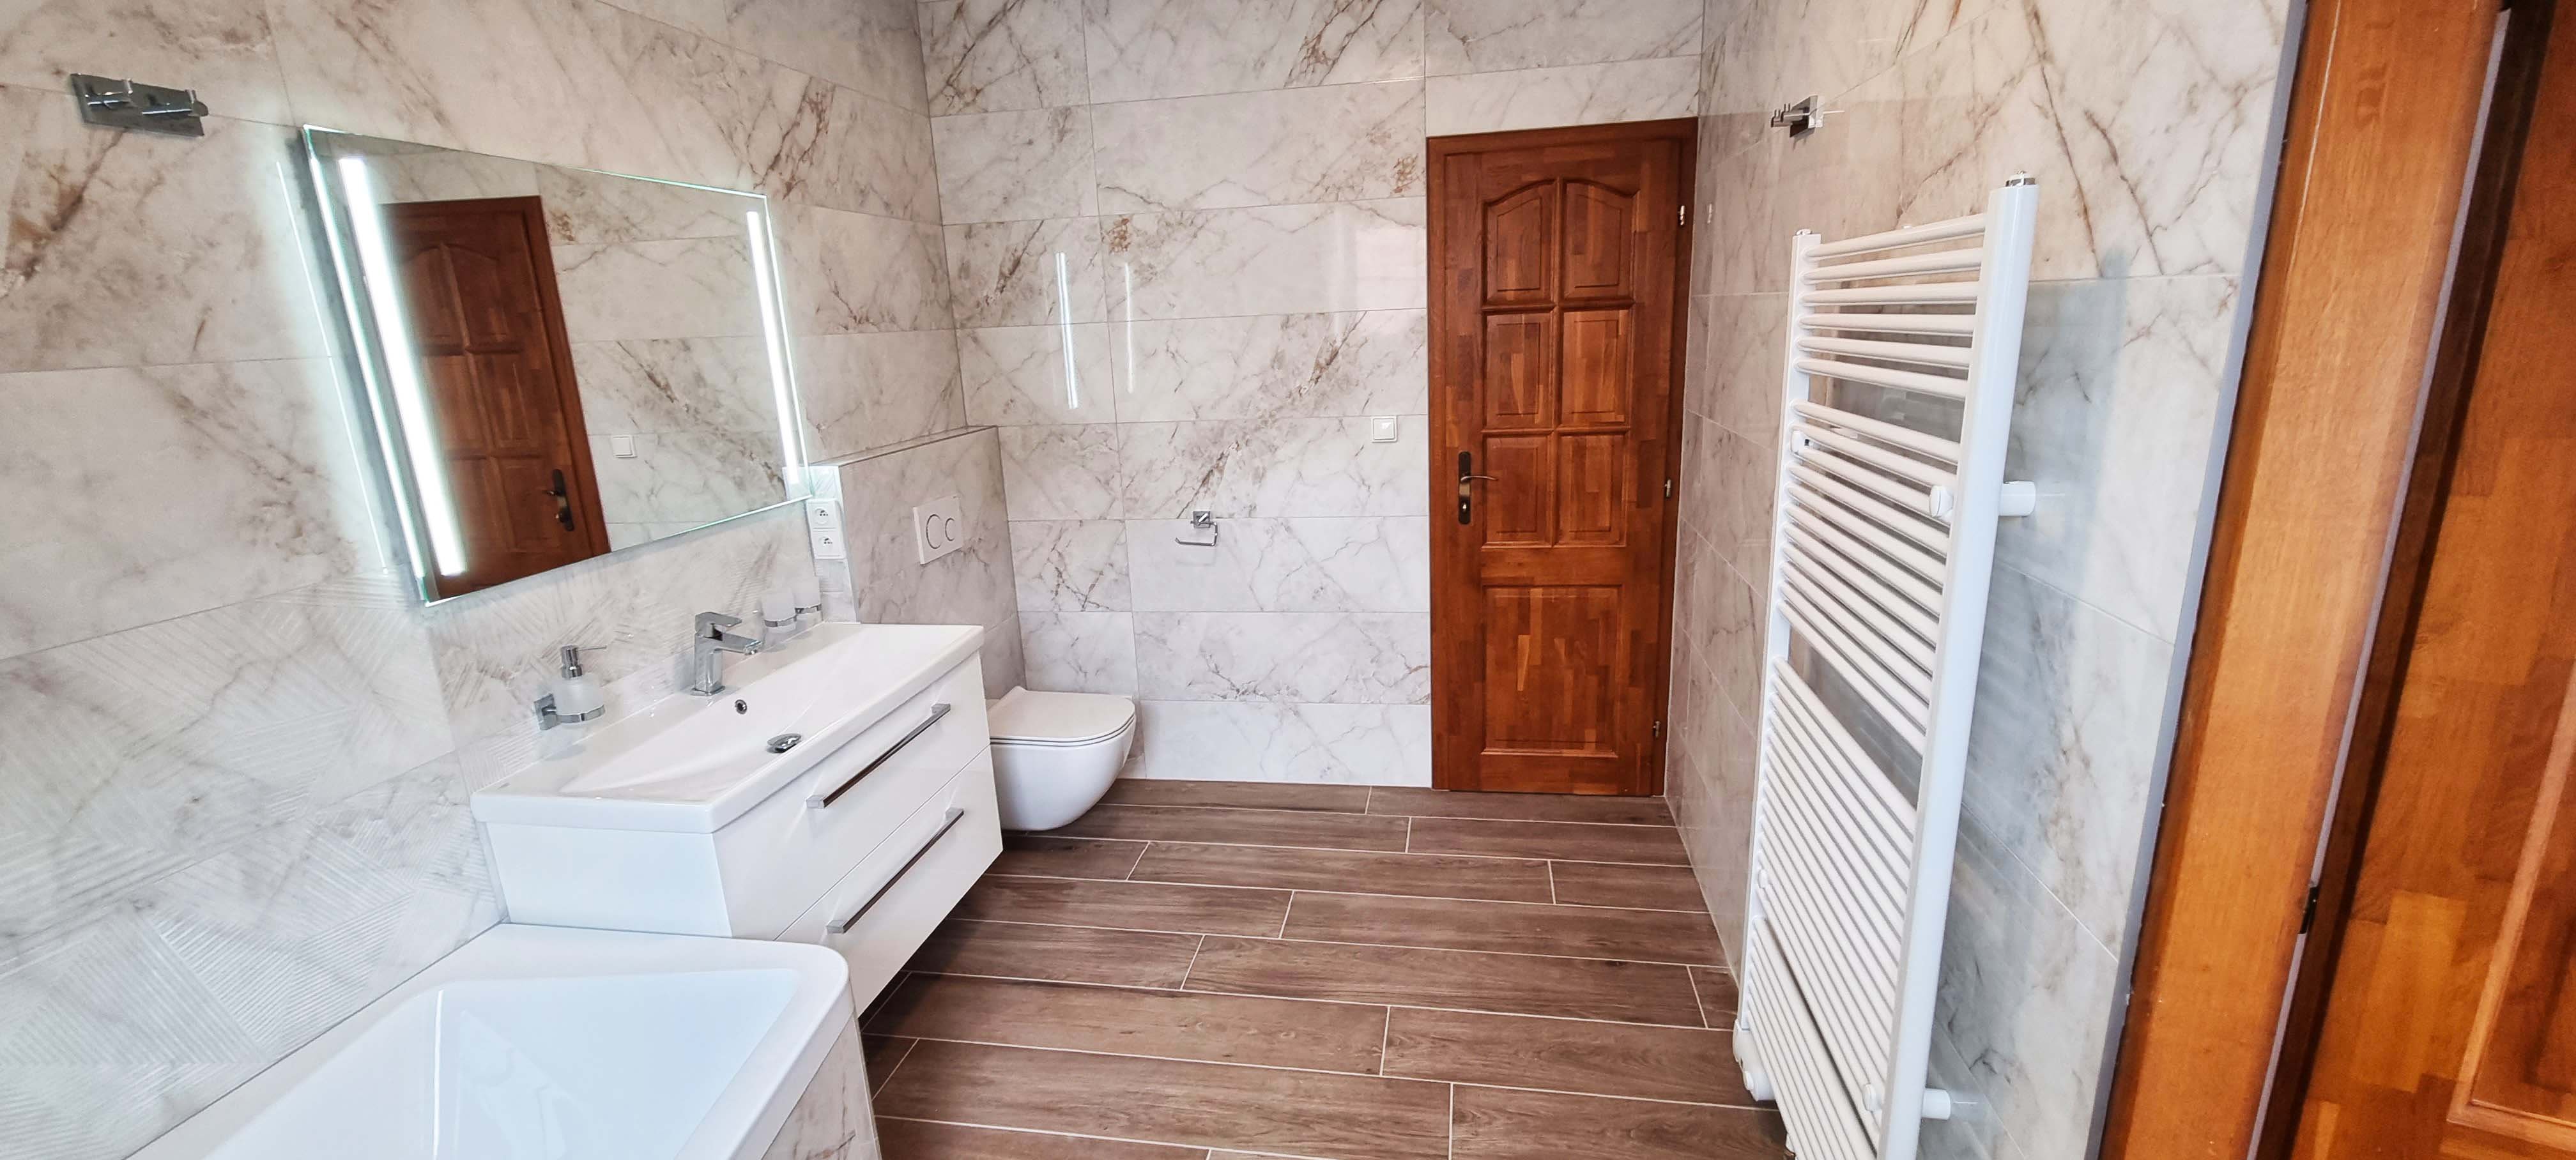 Rekontsrukce koupelny v RD - mramorové obklady Los Kachlos Cuarzo Reno | Koupelny-svitavy.cz